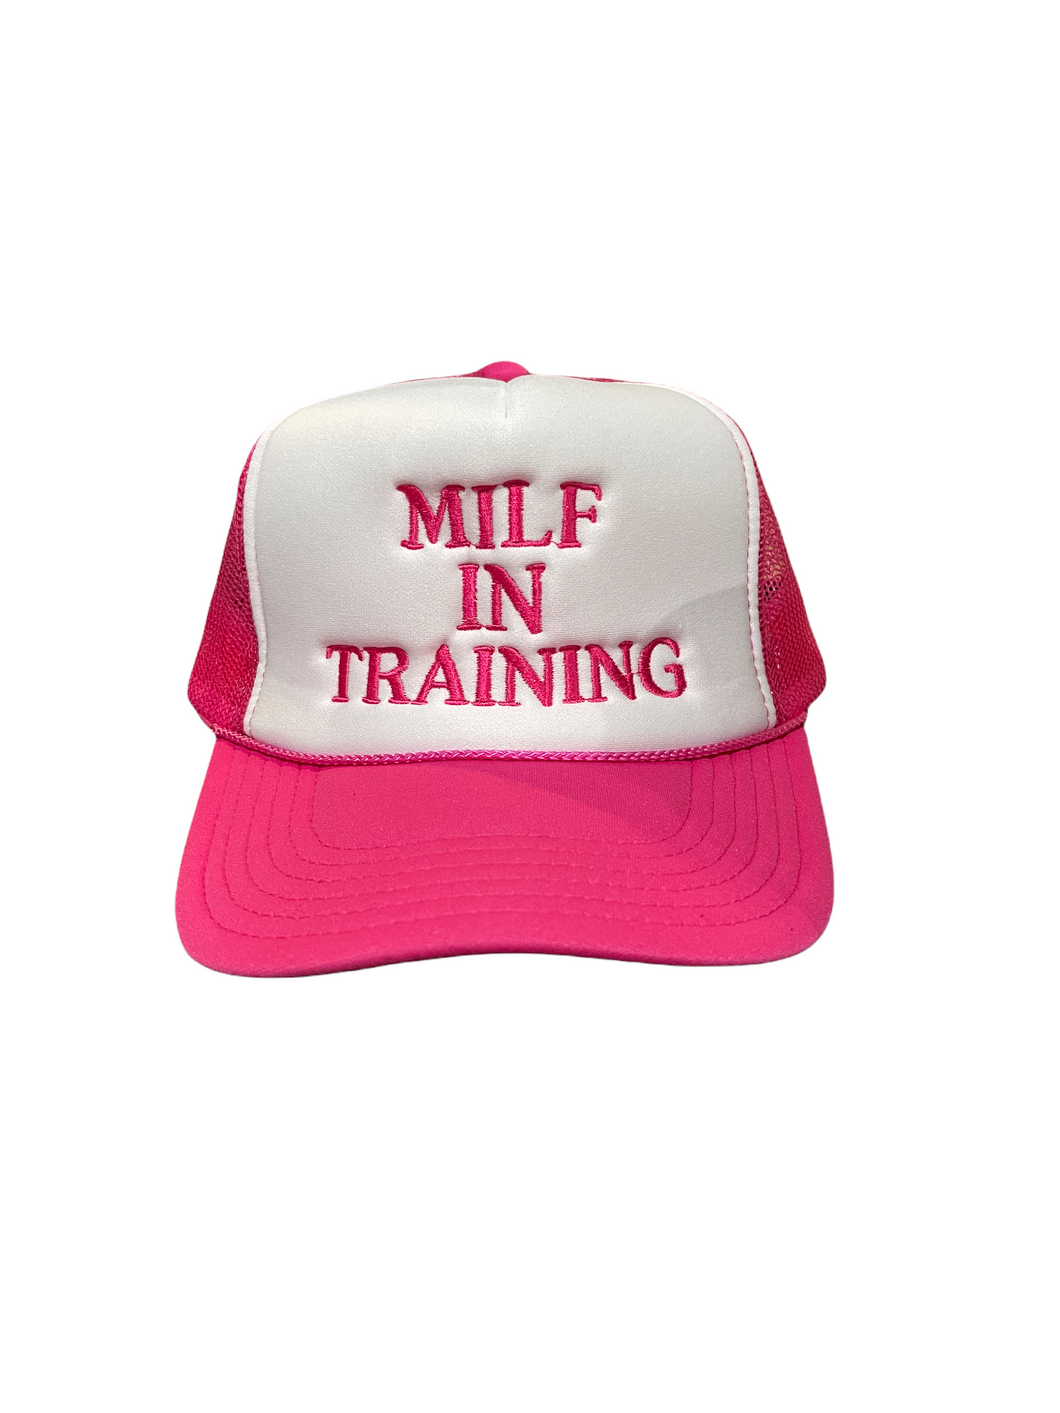 Milf in Training Trucker Hat - hot pink